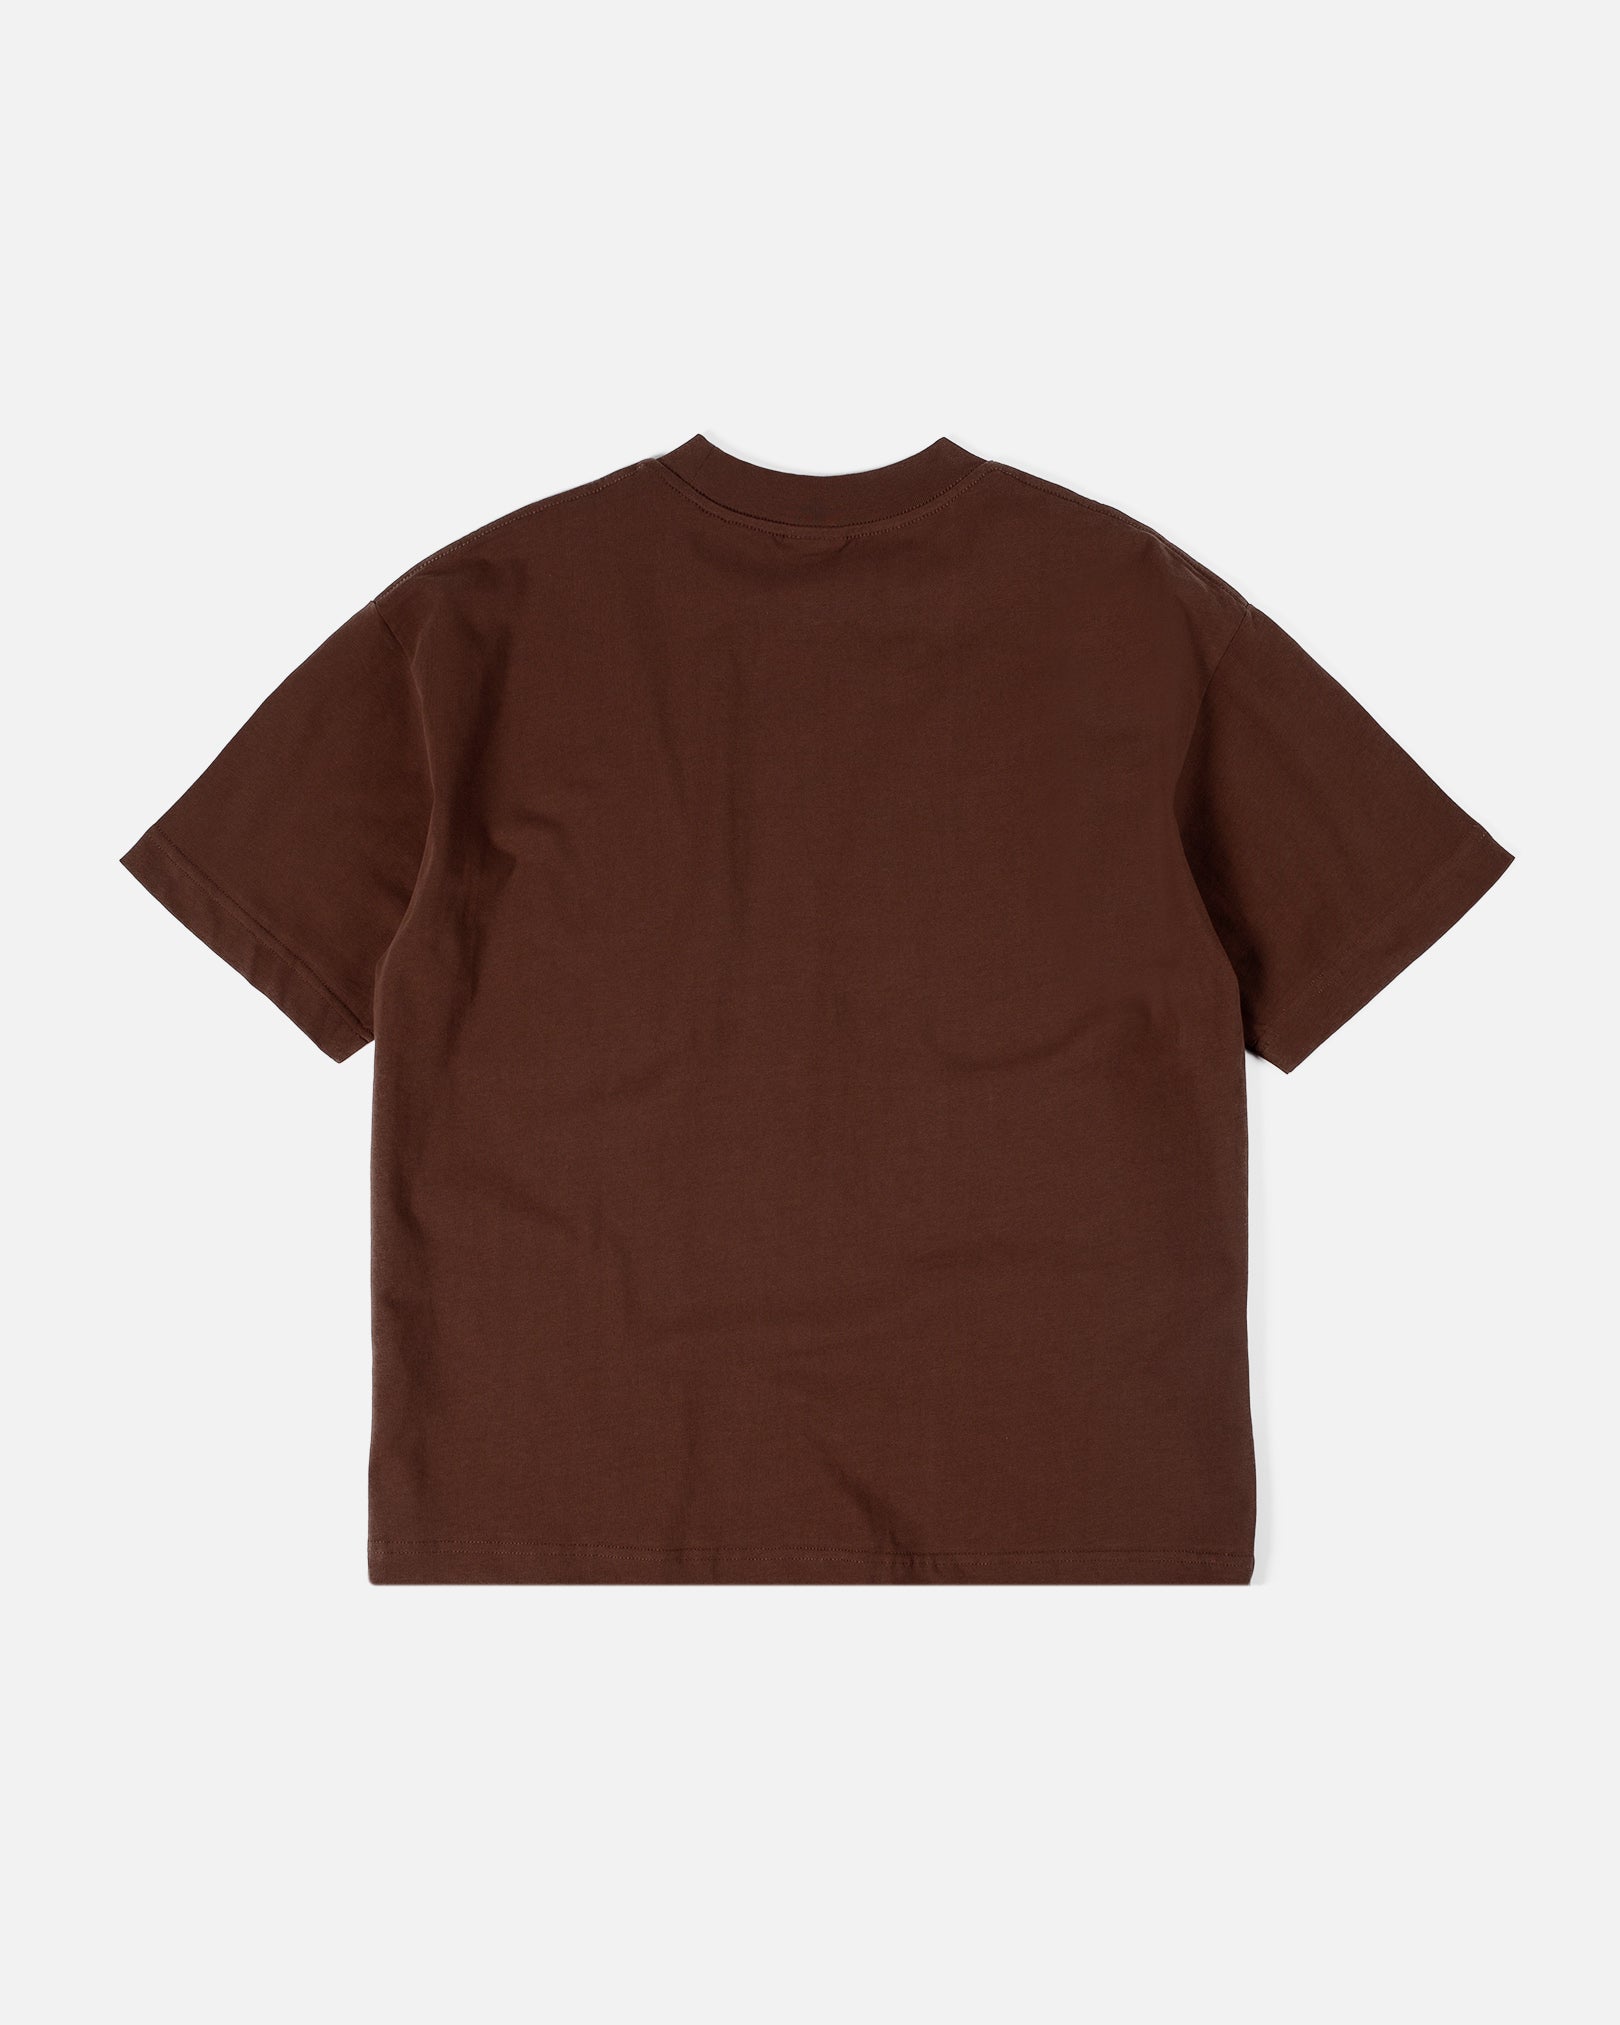 candice-boxy-tshirt-indulge-brown-back